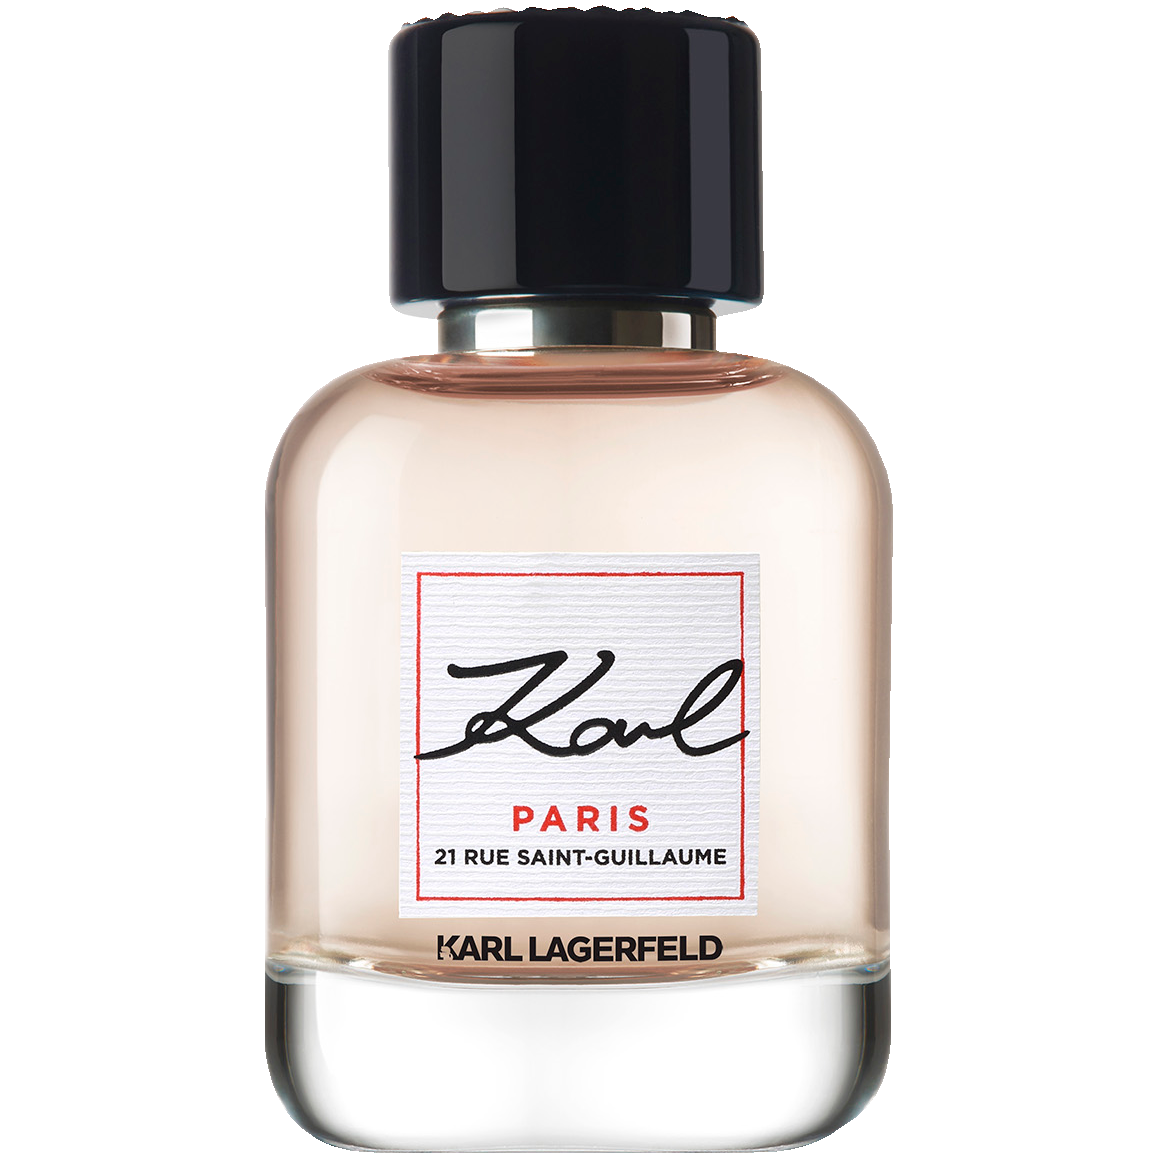 Karl Lagerfeld woda perfumowana damska, 60 ml | hebe.pl